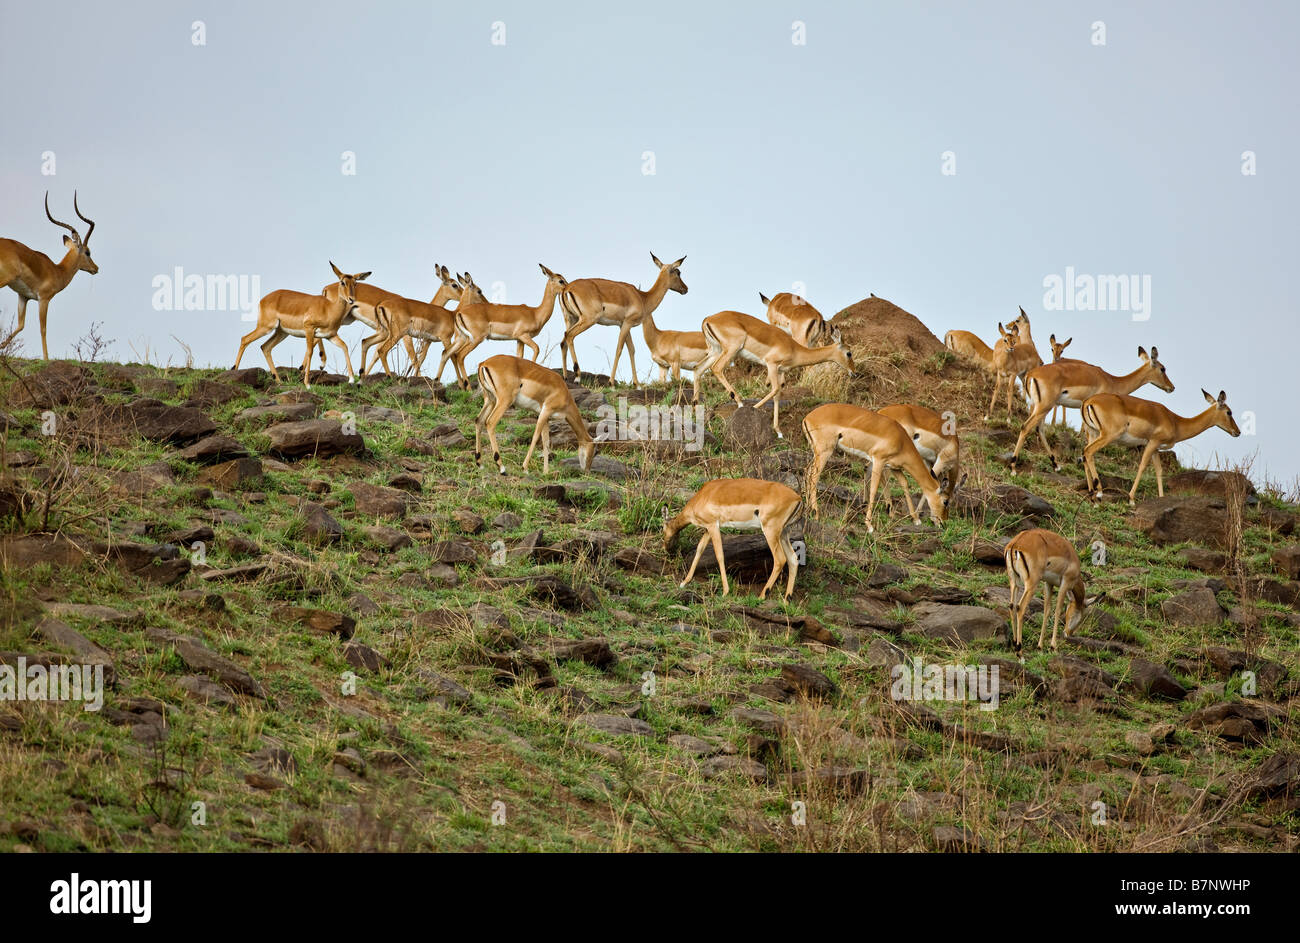 Afrique, Kenya, Masai Mara, district de Narok. Un troupeau de 501 dans le Masai Mara National Reserve du sud du Kenya Banque D'Images